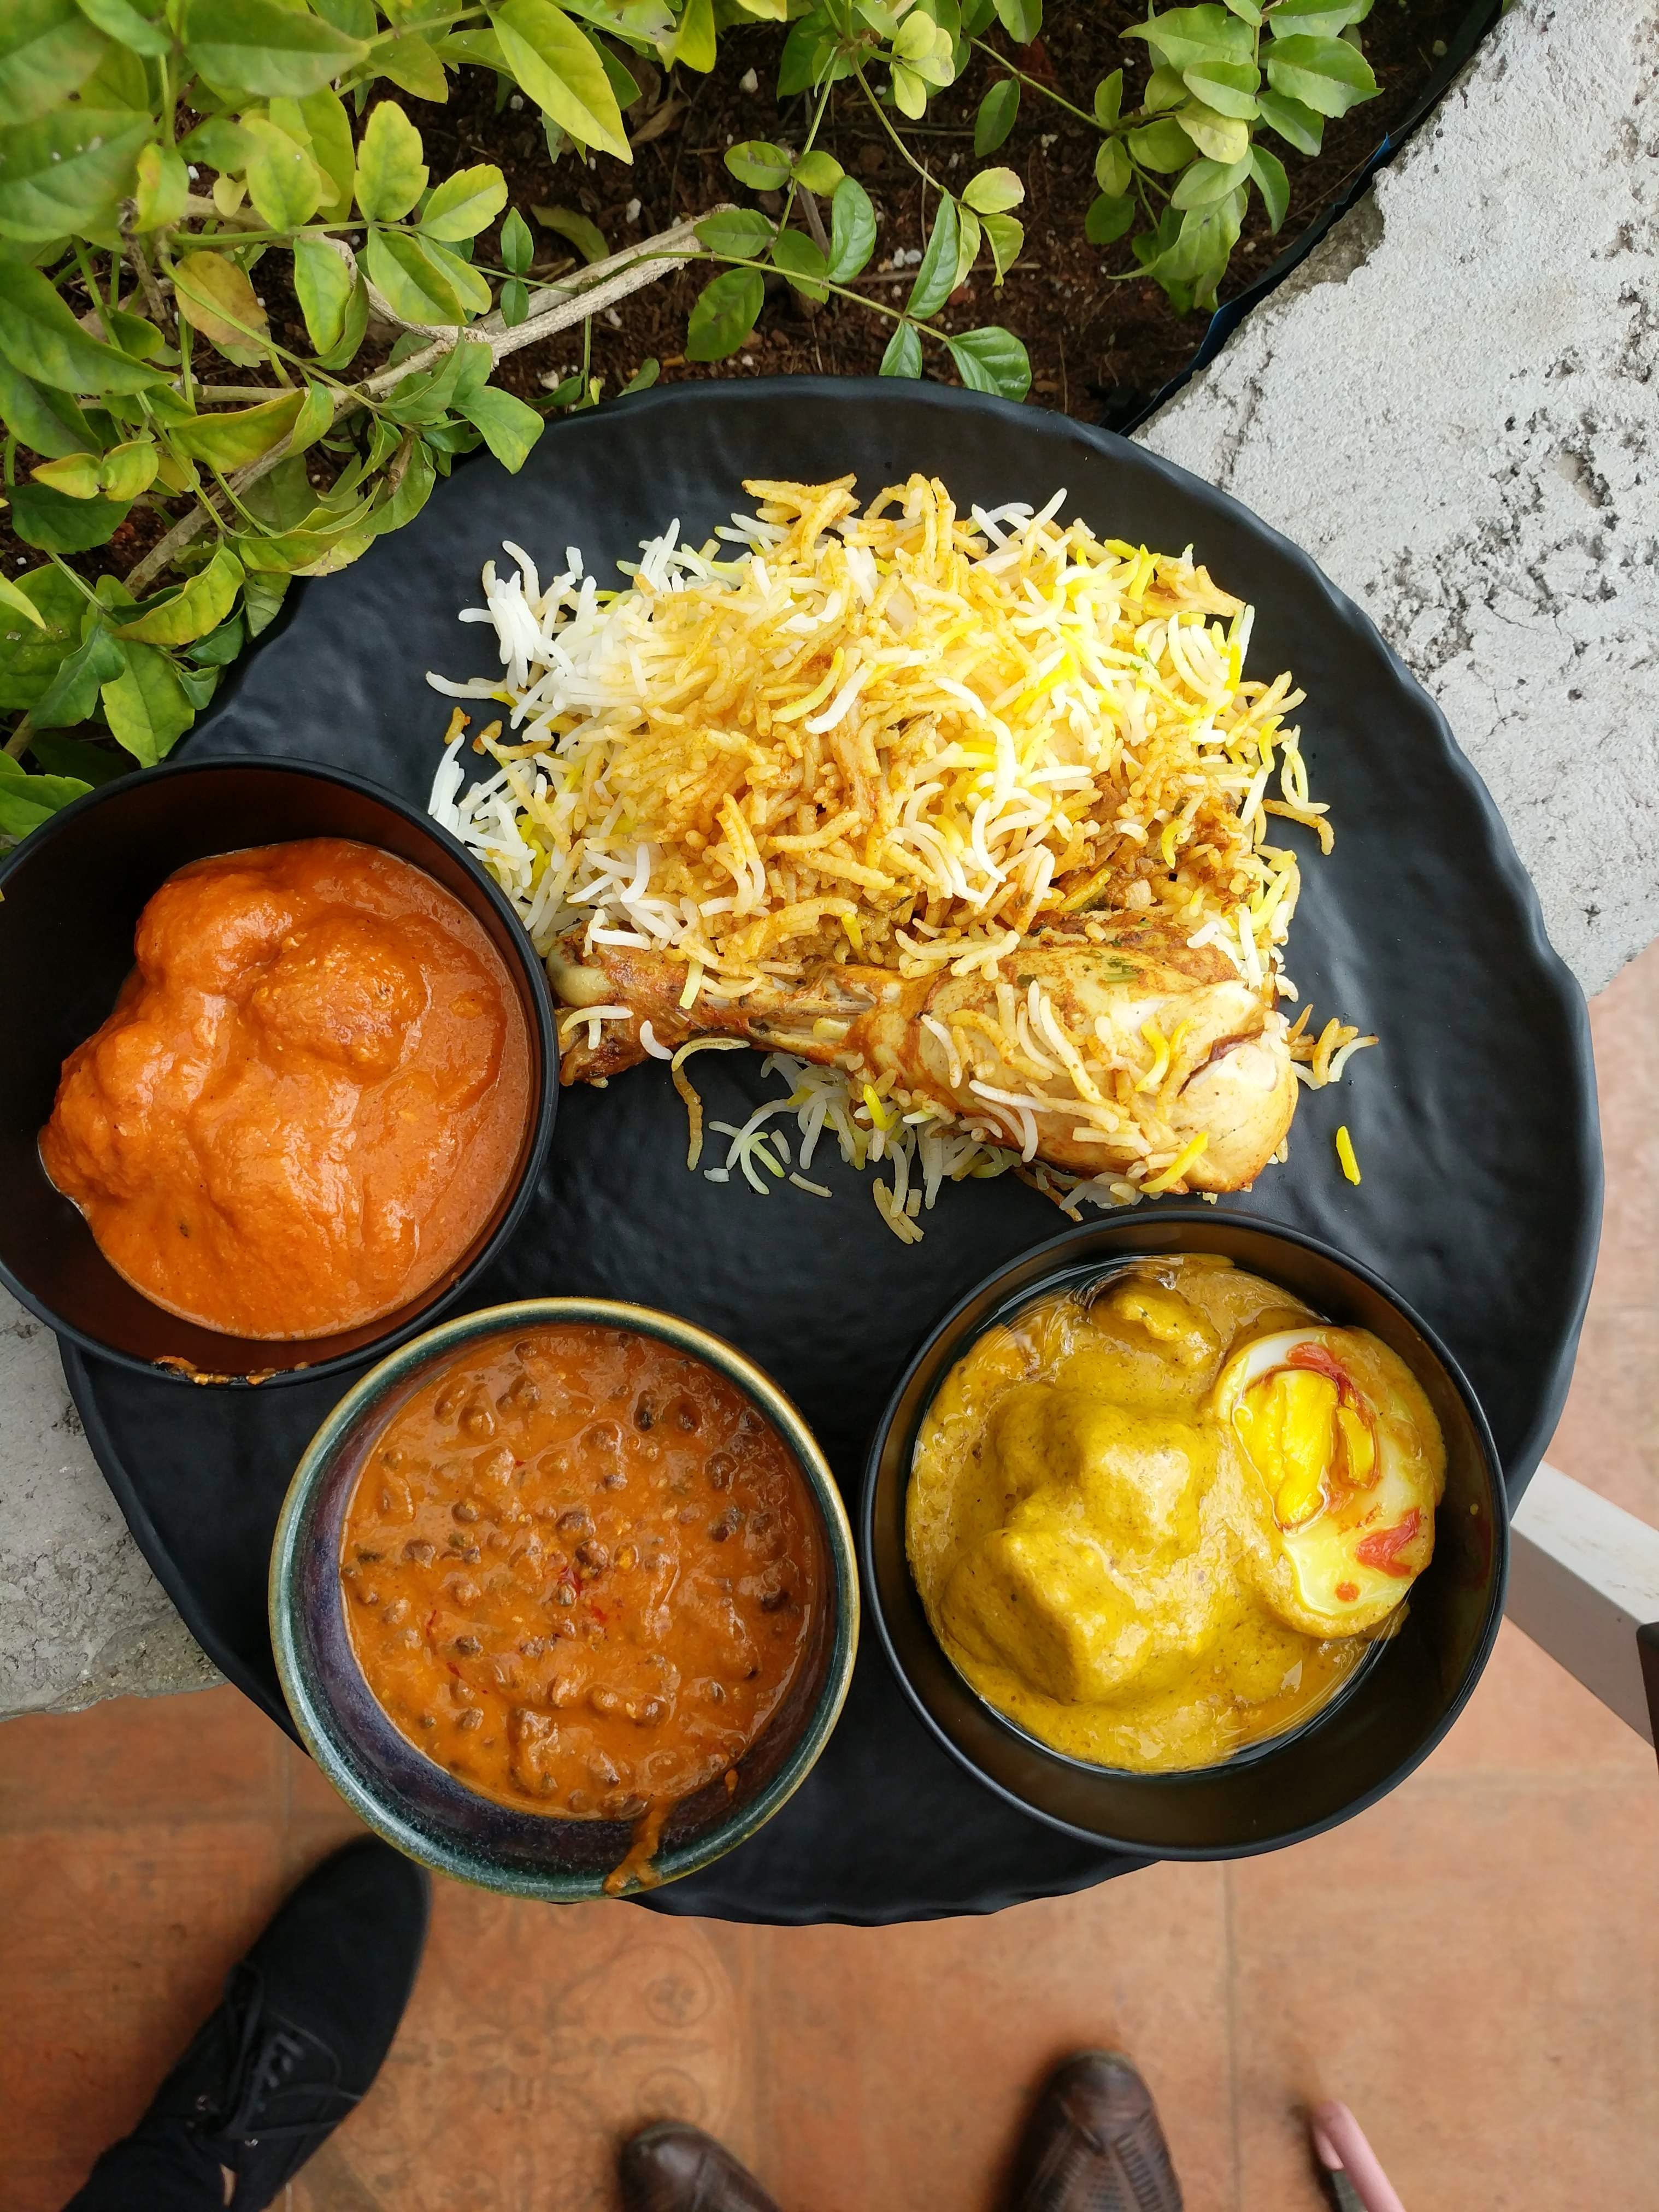 Dish,Food,Cuisine,Ingredient,Vegetarian food,Produce,Recipe,Side dish,Meal,Indian cuisine